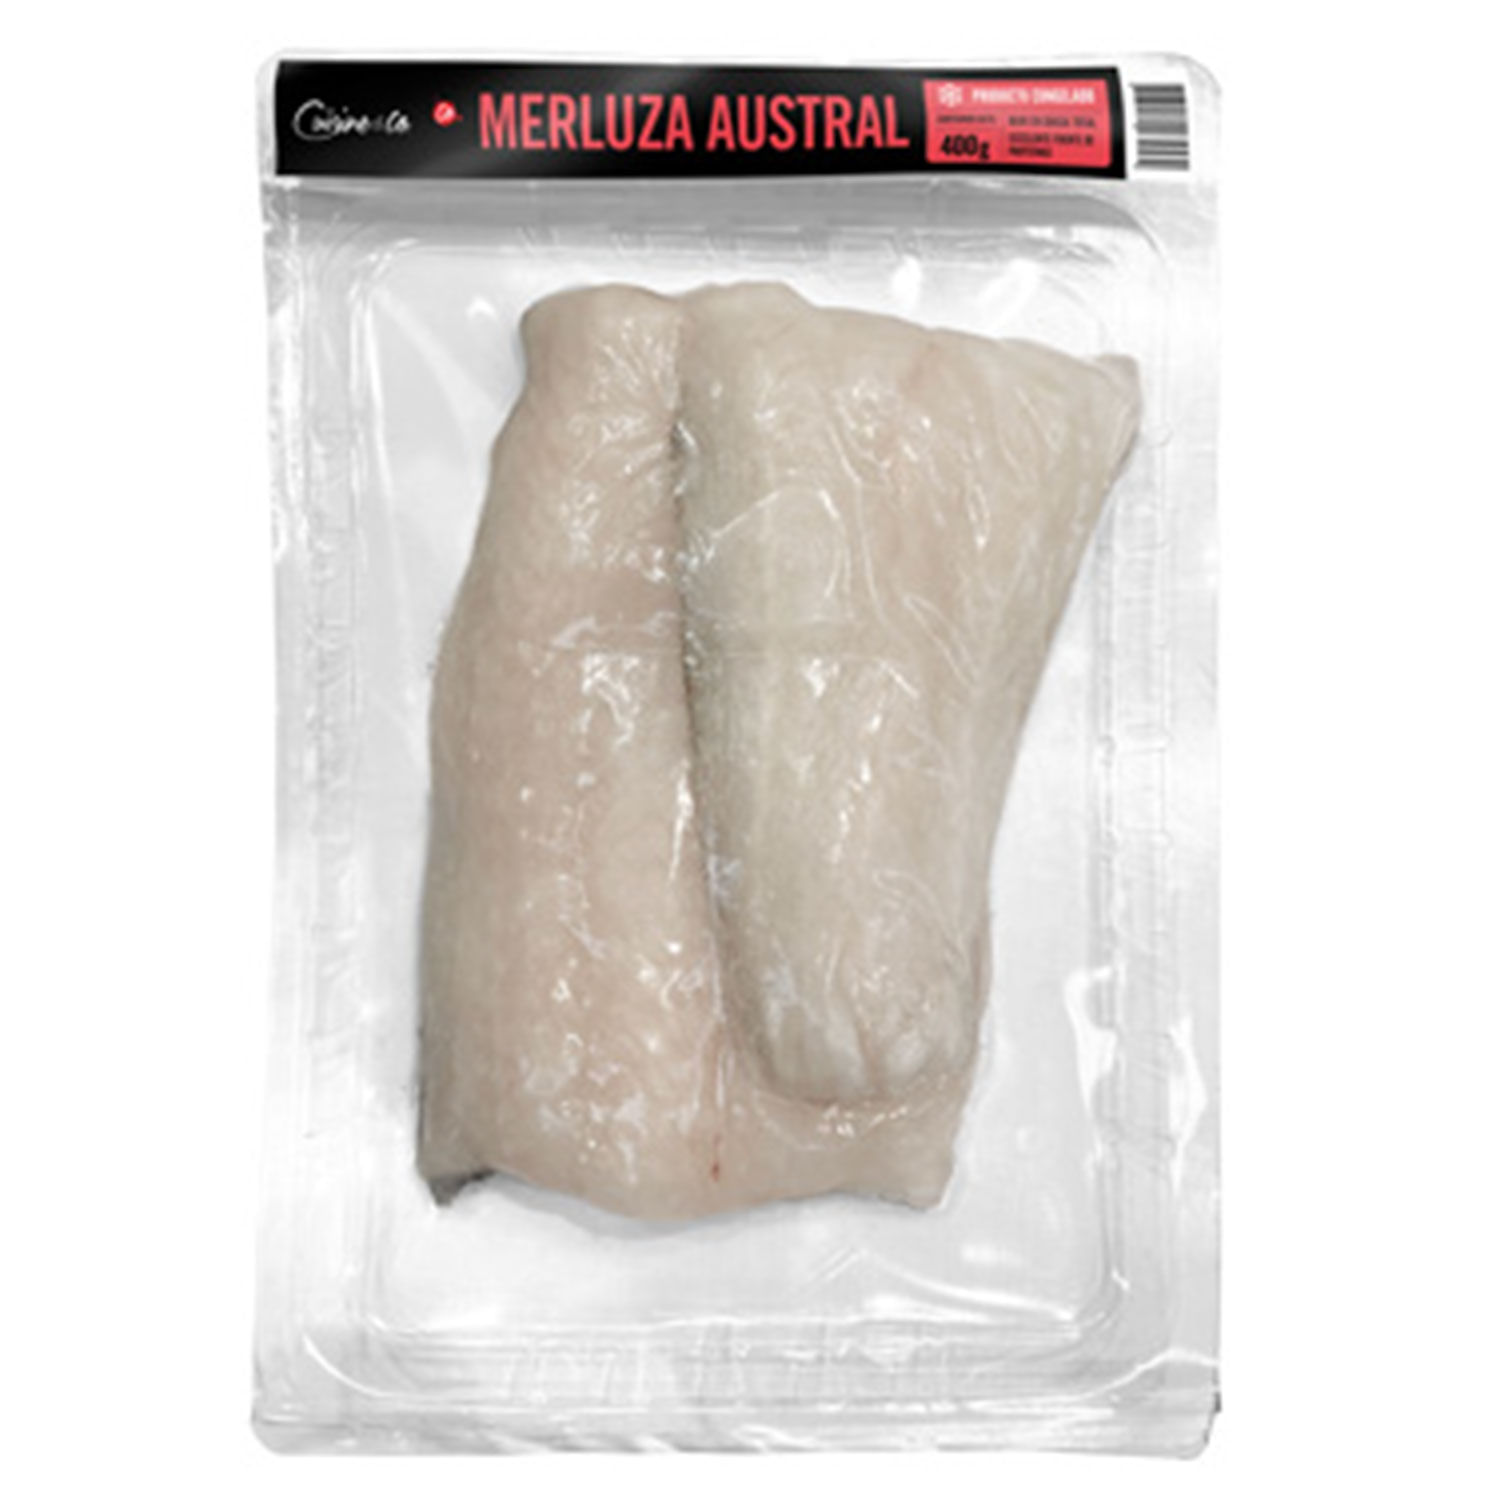 Merluza Premium Austral Congelada Al Vacío 400 g